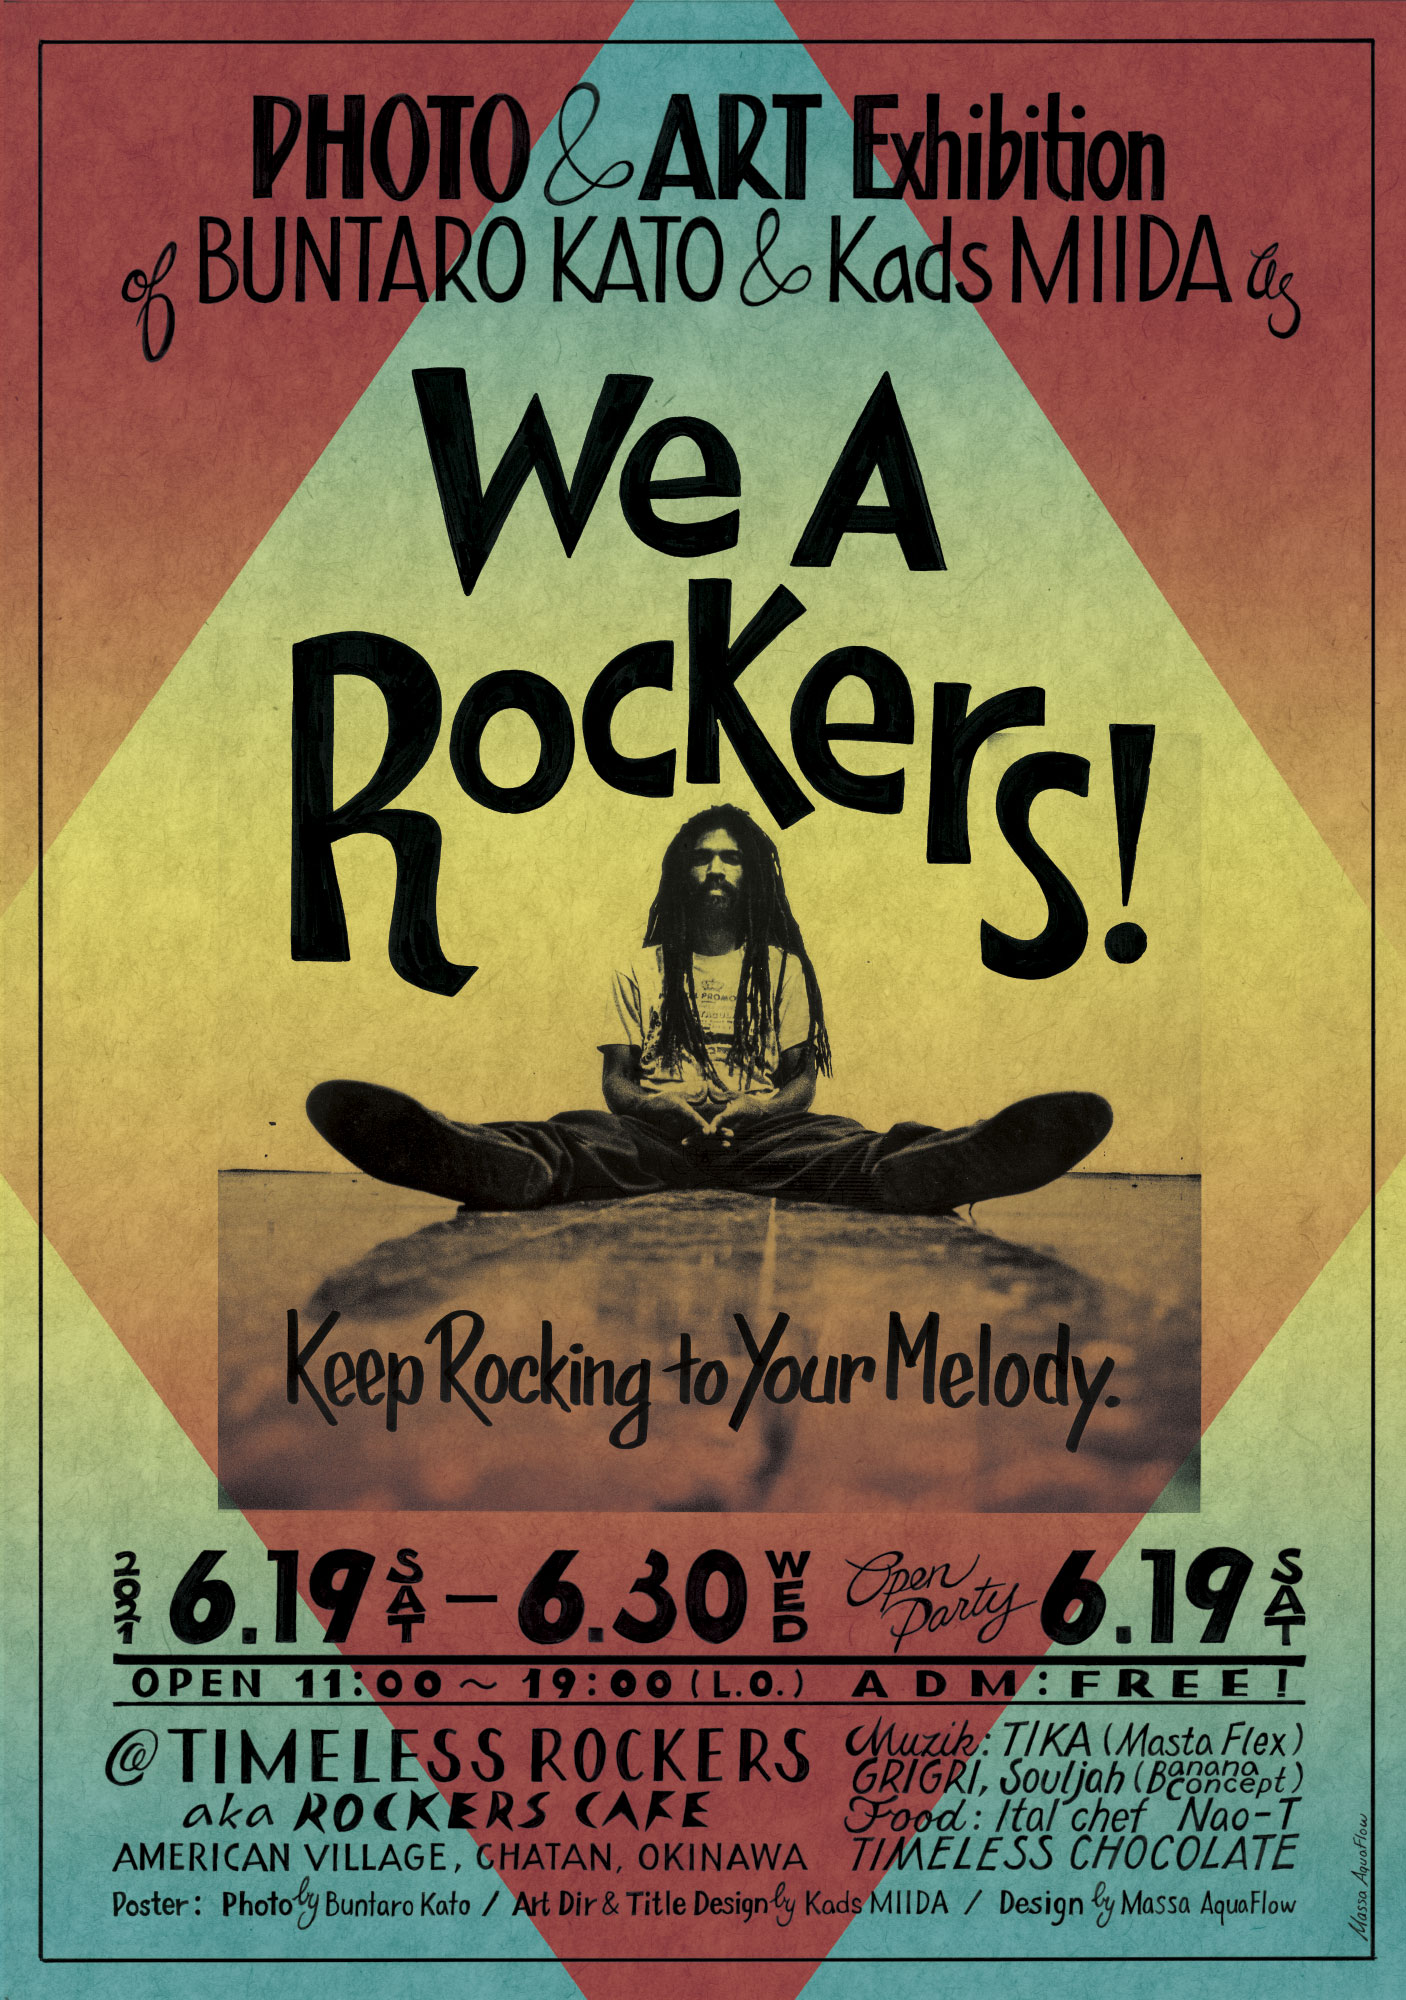 We A Rockers!